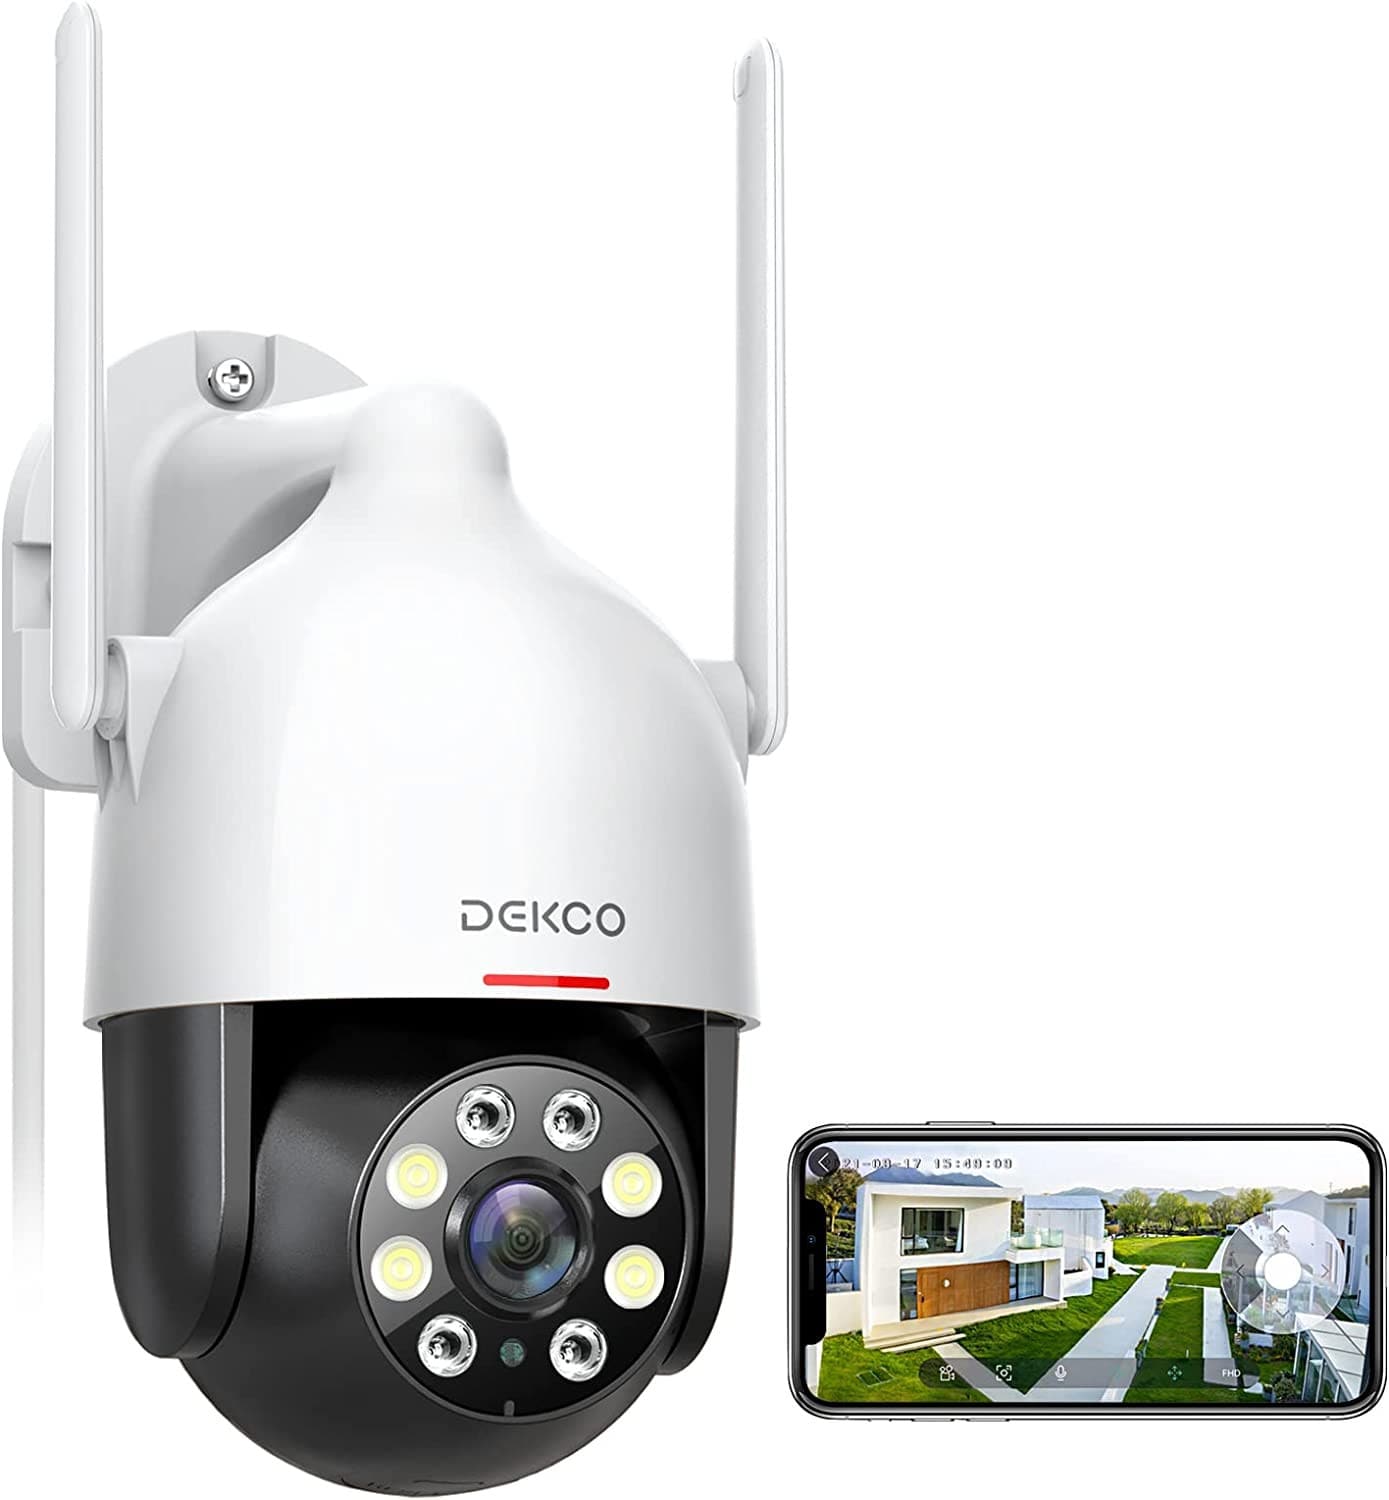 DEKCO 2K Security Camera Outdoor/Home, WiFi  $39.99